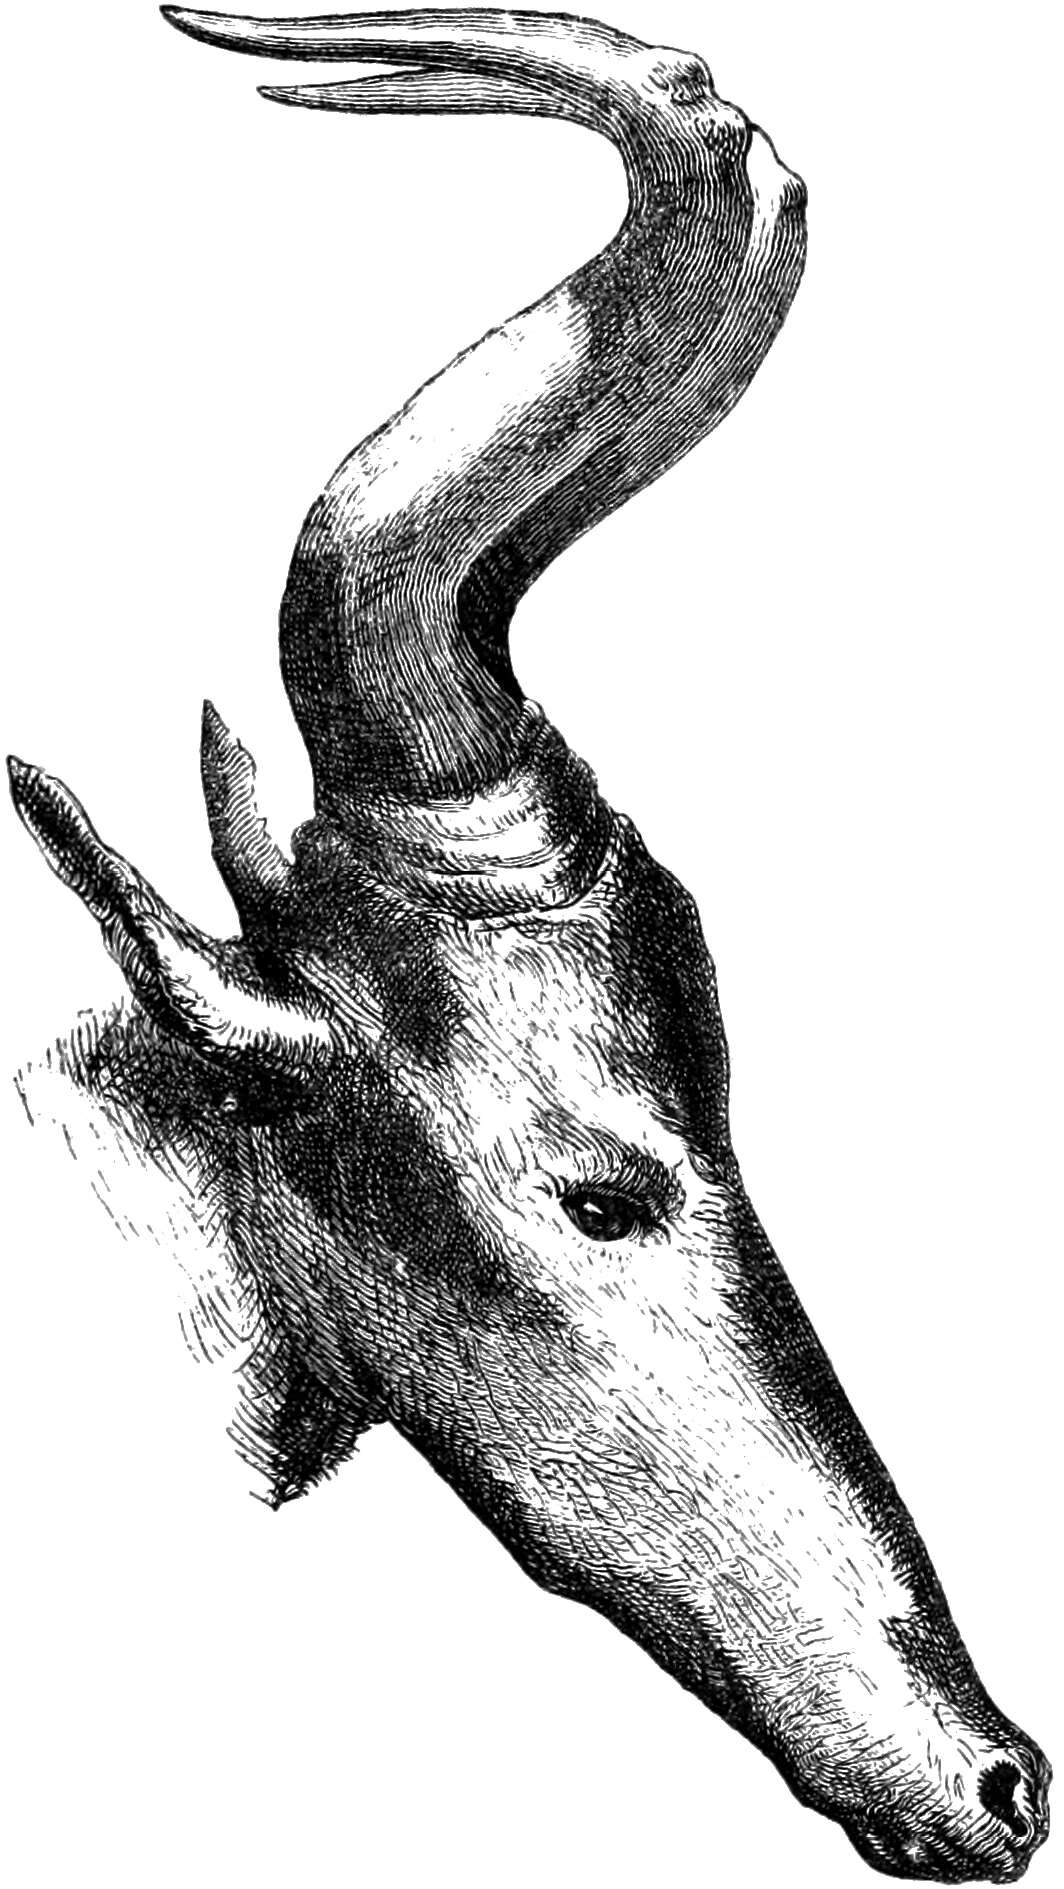 Image of Alcelaphus buselaphus caama